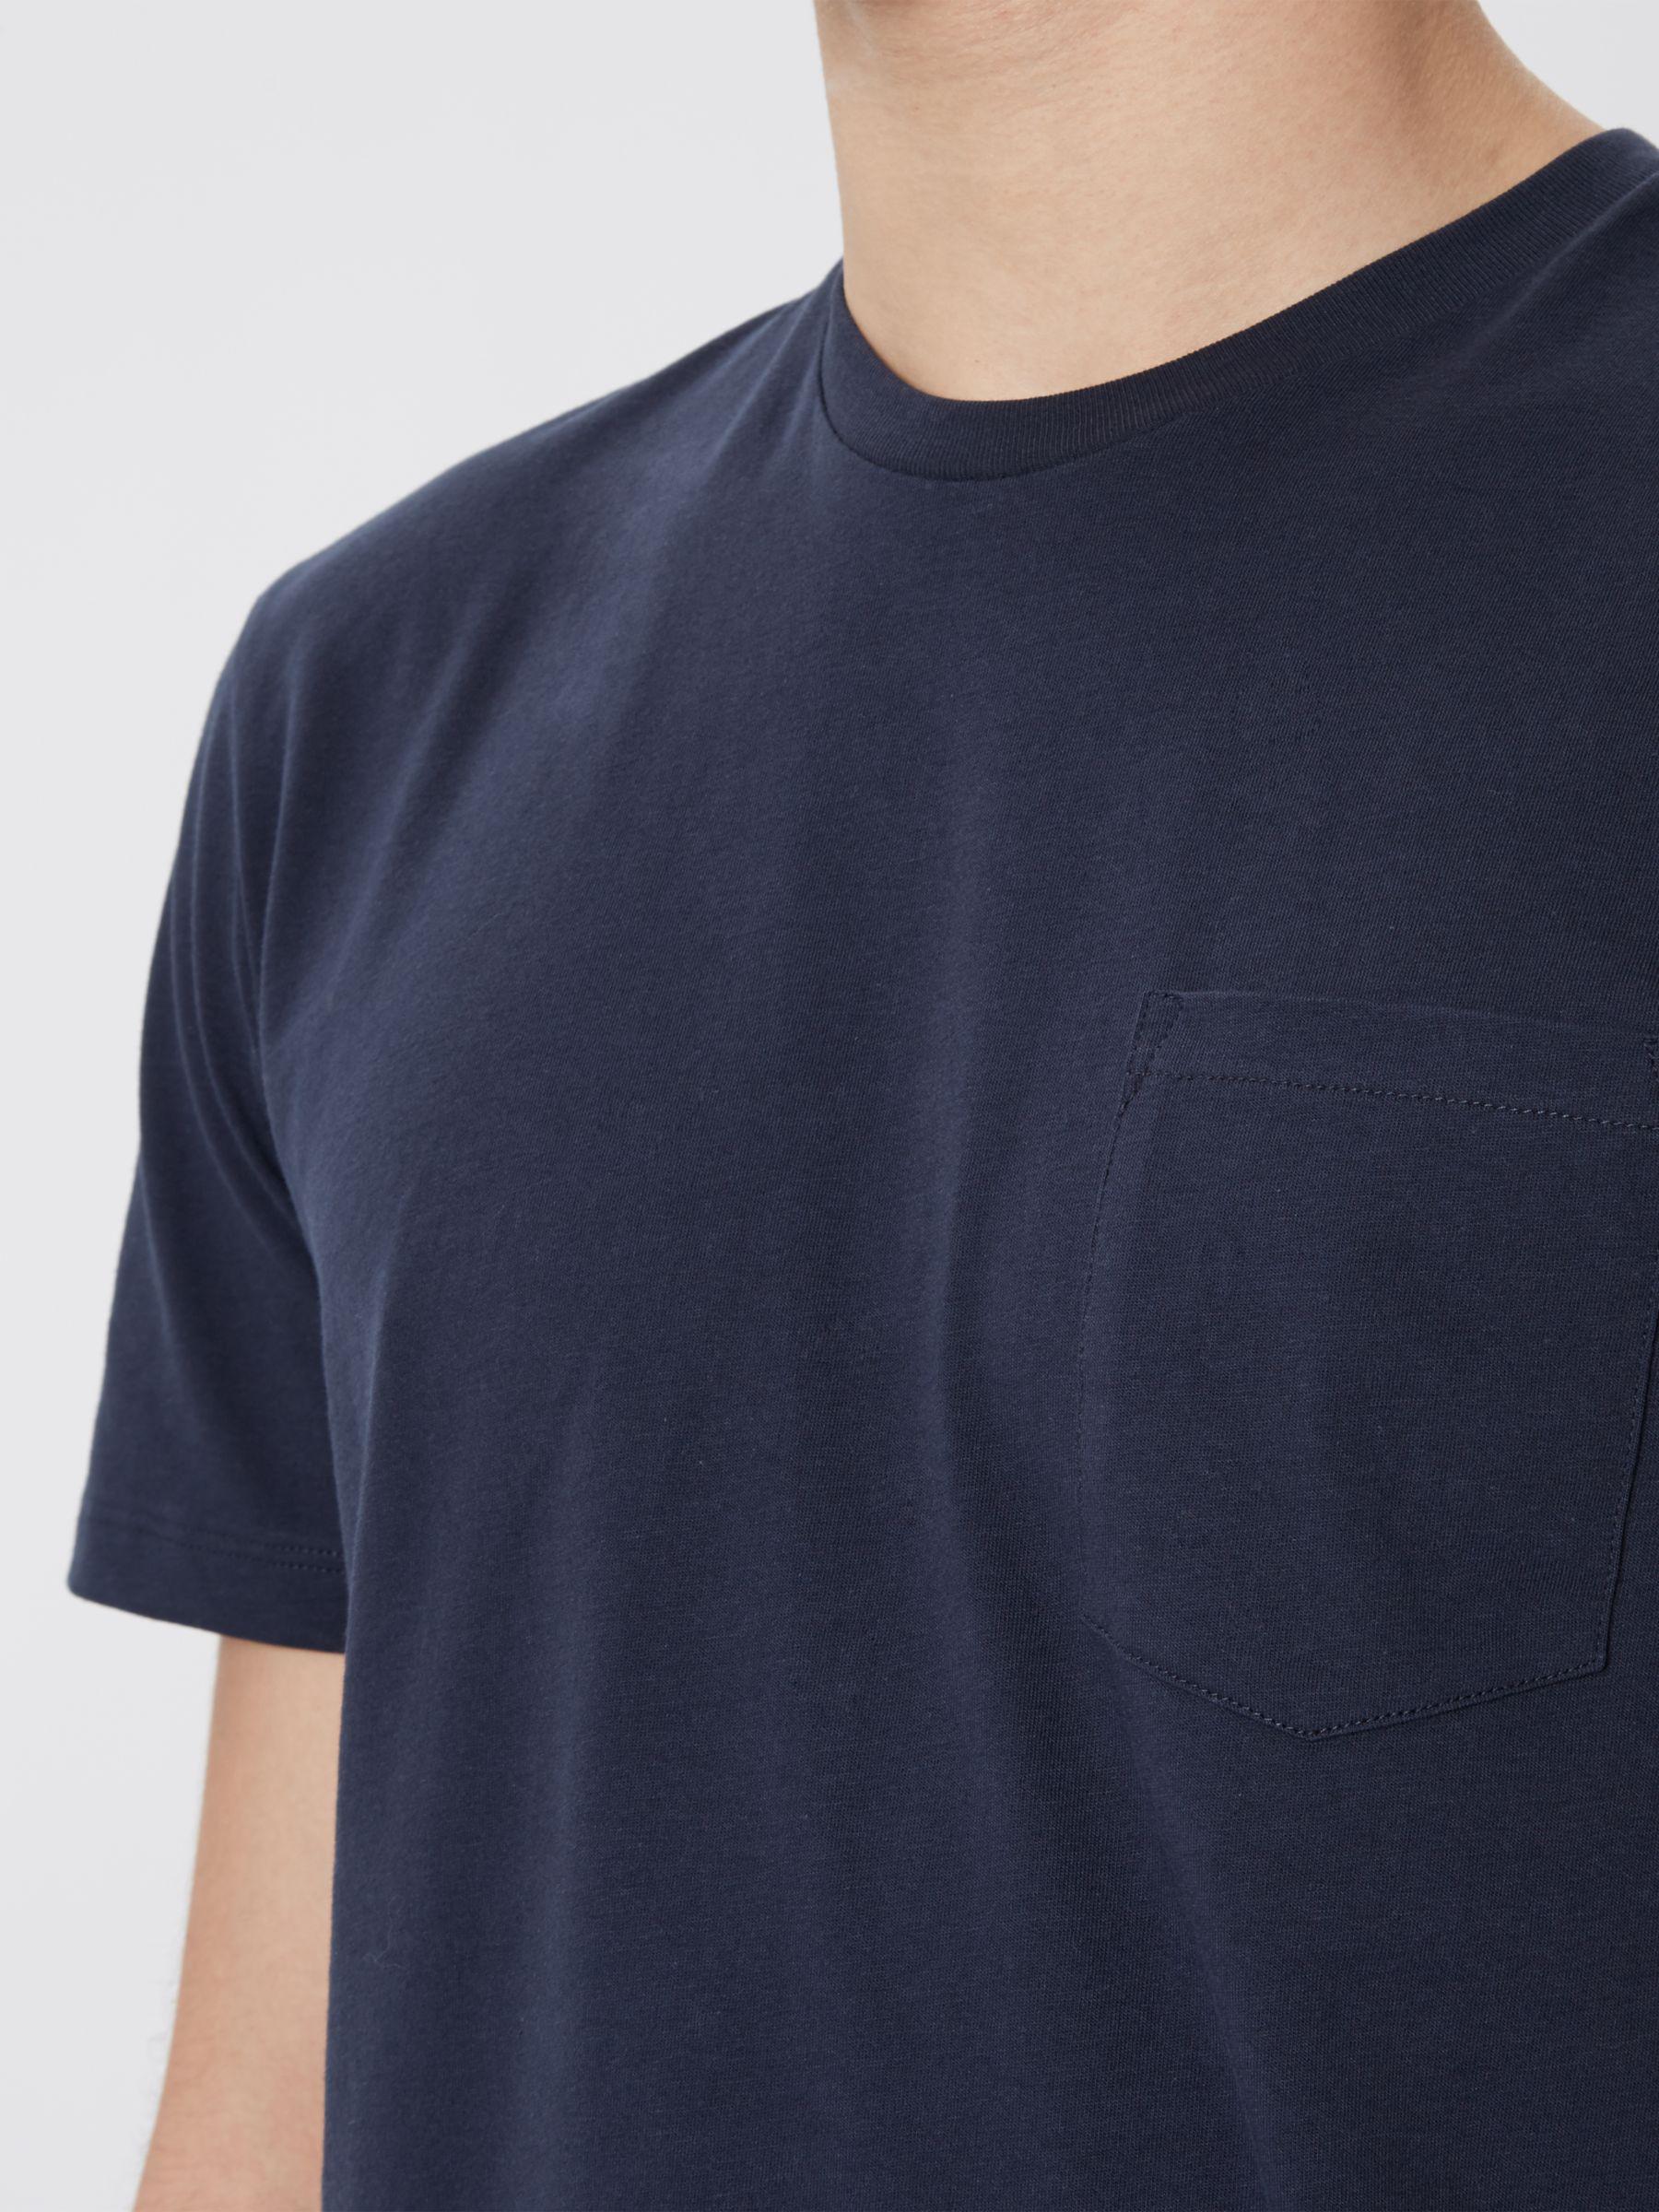 Jaeger Organic Cotton T-shirt in Navy (Blue) for Men - Lyst